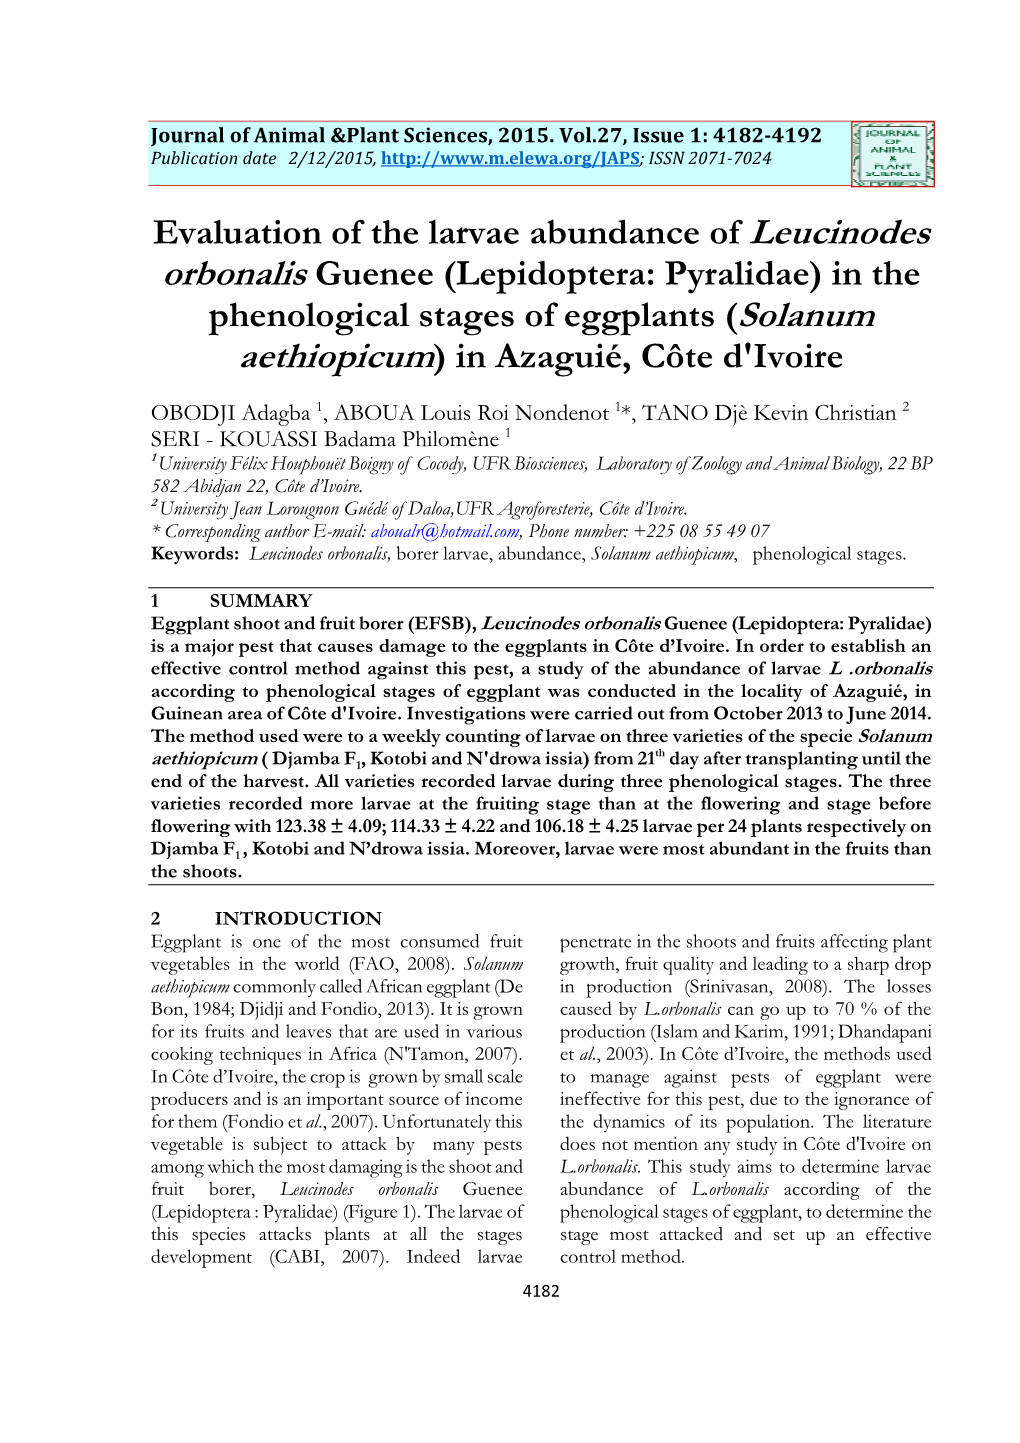 Evaluation of the Larvae Abundance of Leucinodes Orbonalis Guenee